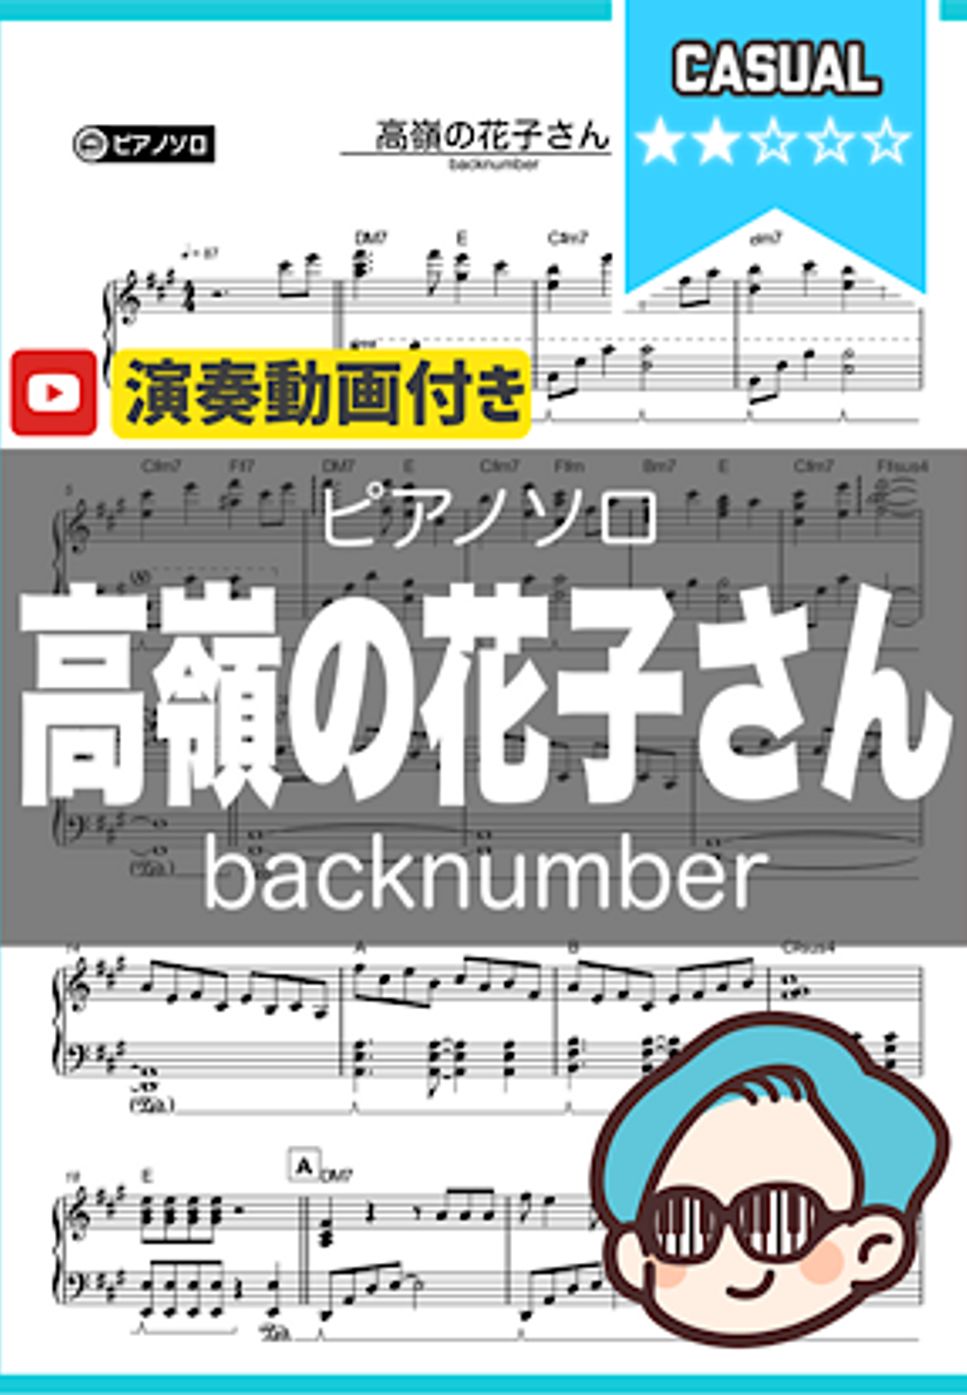 backnumber - 高嶺の花子さん by THETA